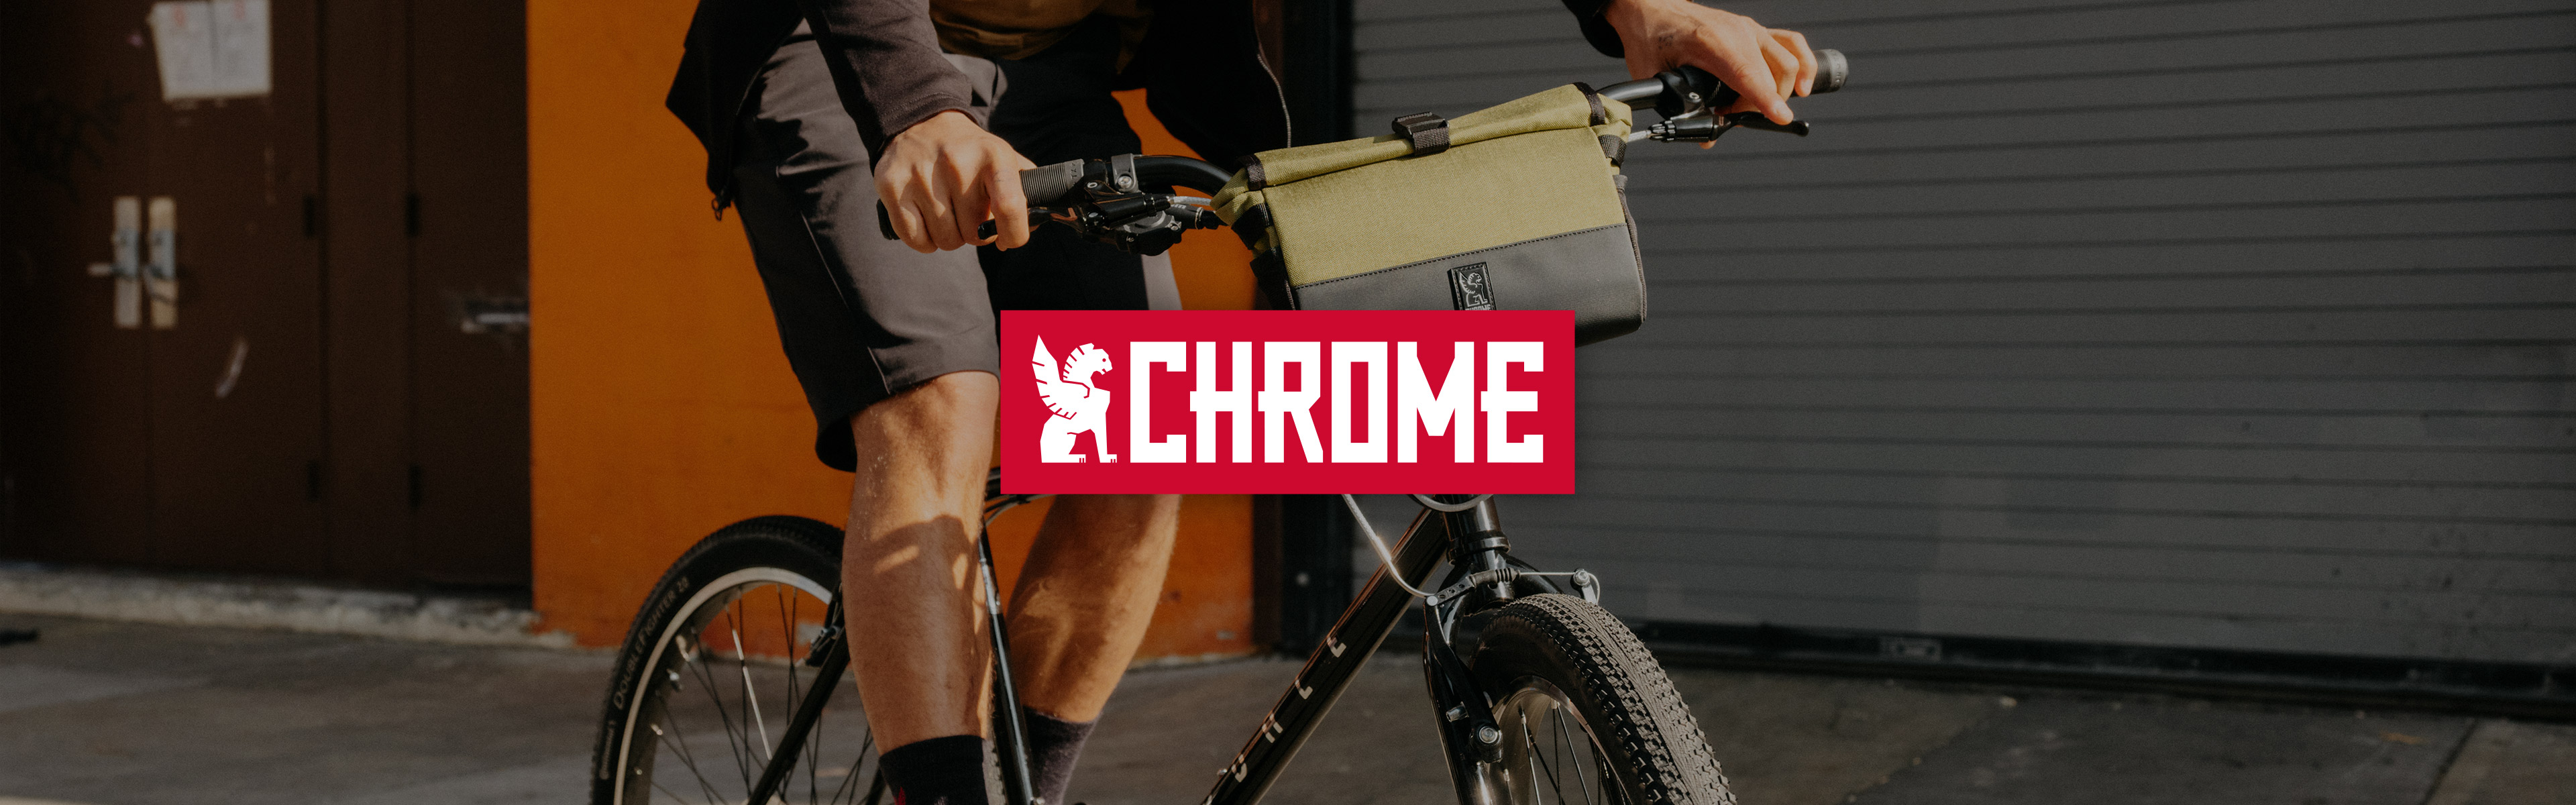 Chrome Industries Brand Shop | BMO Bike Mailorder